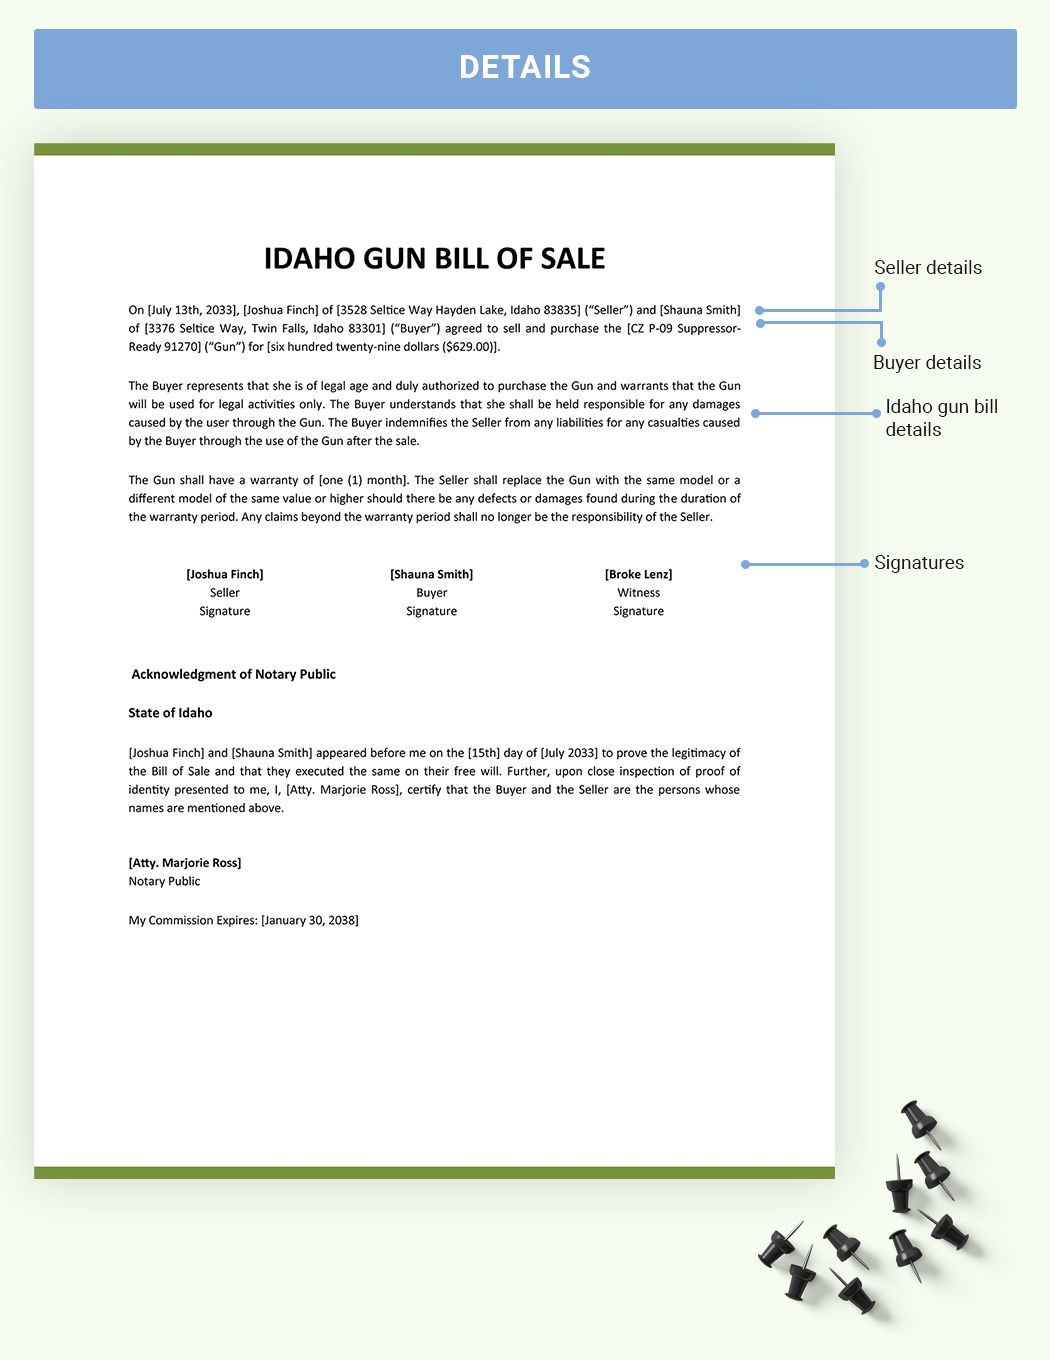 Idaho Firearm / Gun Bill Of Sale Template